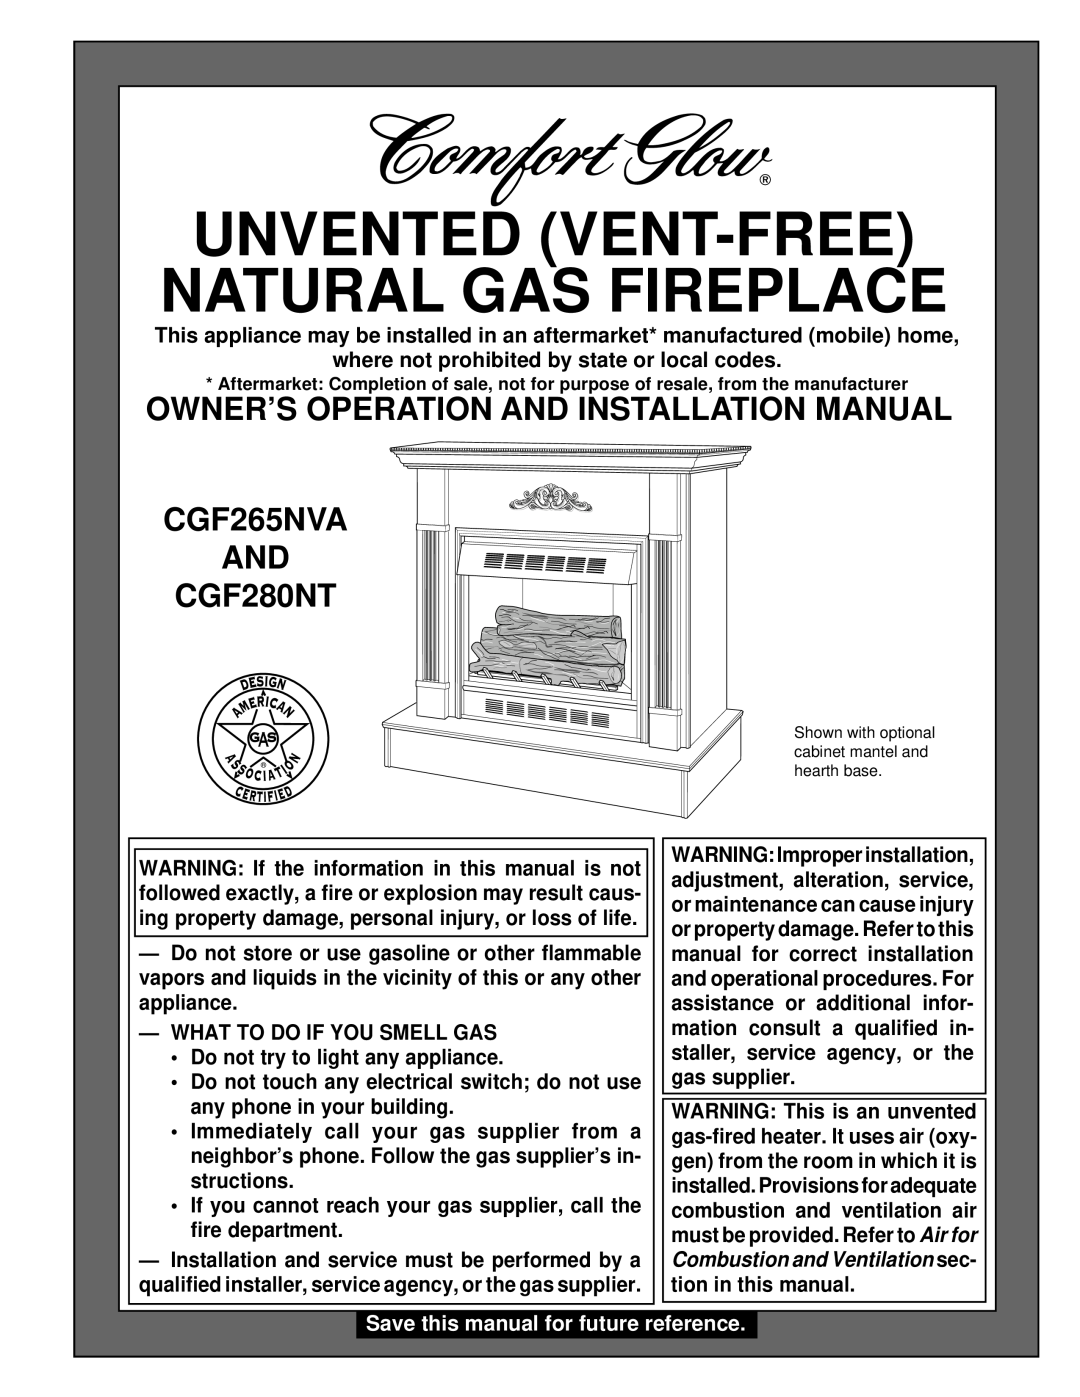 Desa Tech installation manual Owner’S Operation And Installation Manual, CGF265NVA AND CGF280NT 